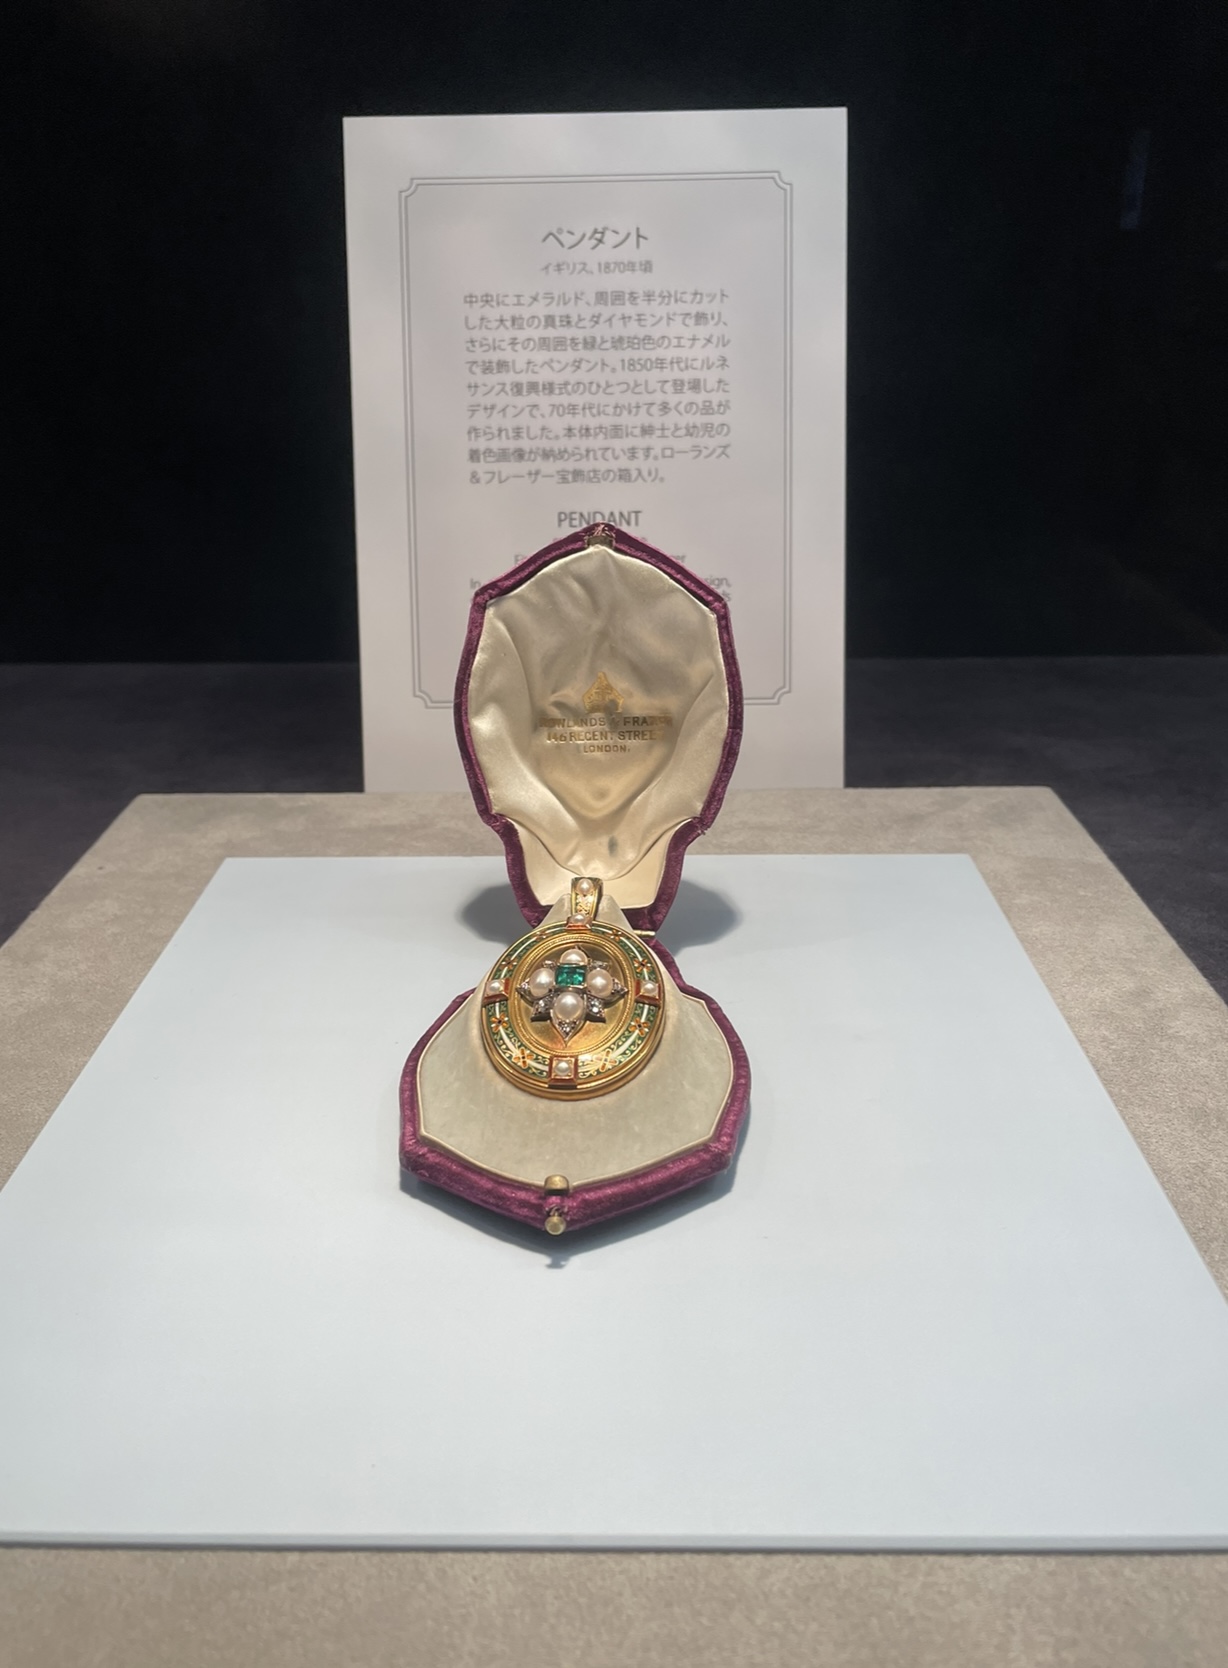 Pearl Pendant - Mikimoto Pearl Museum